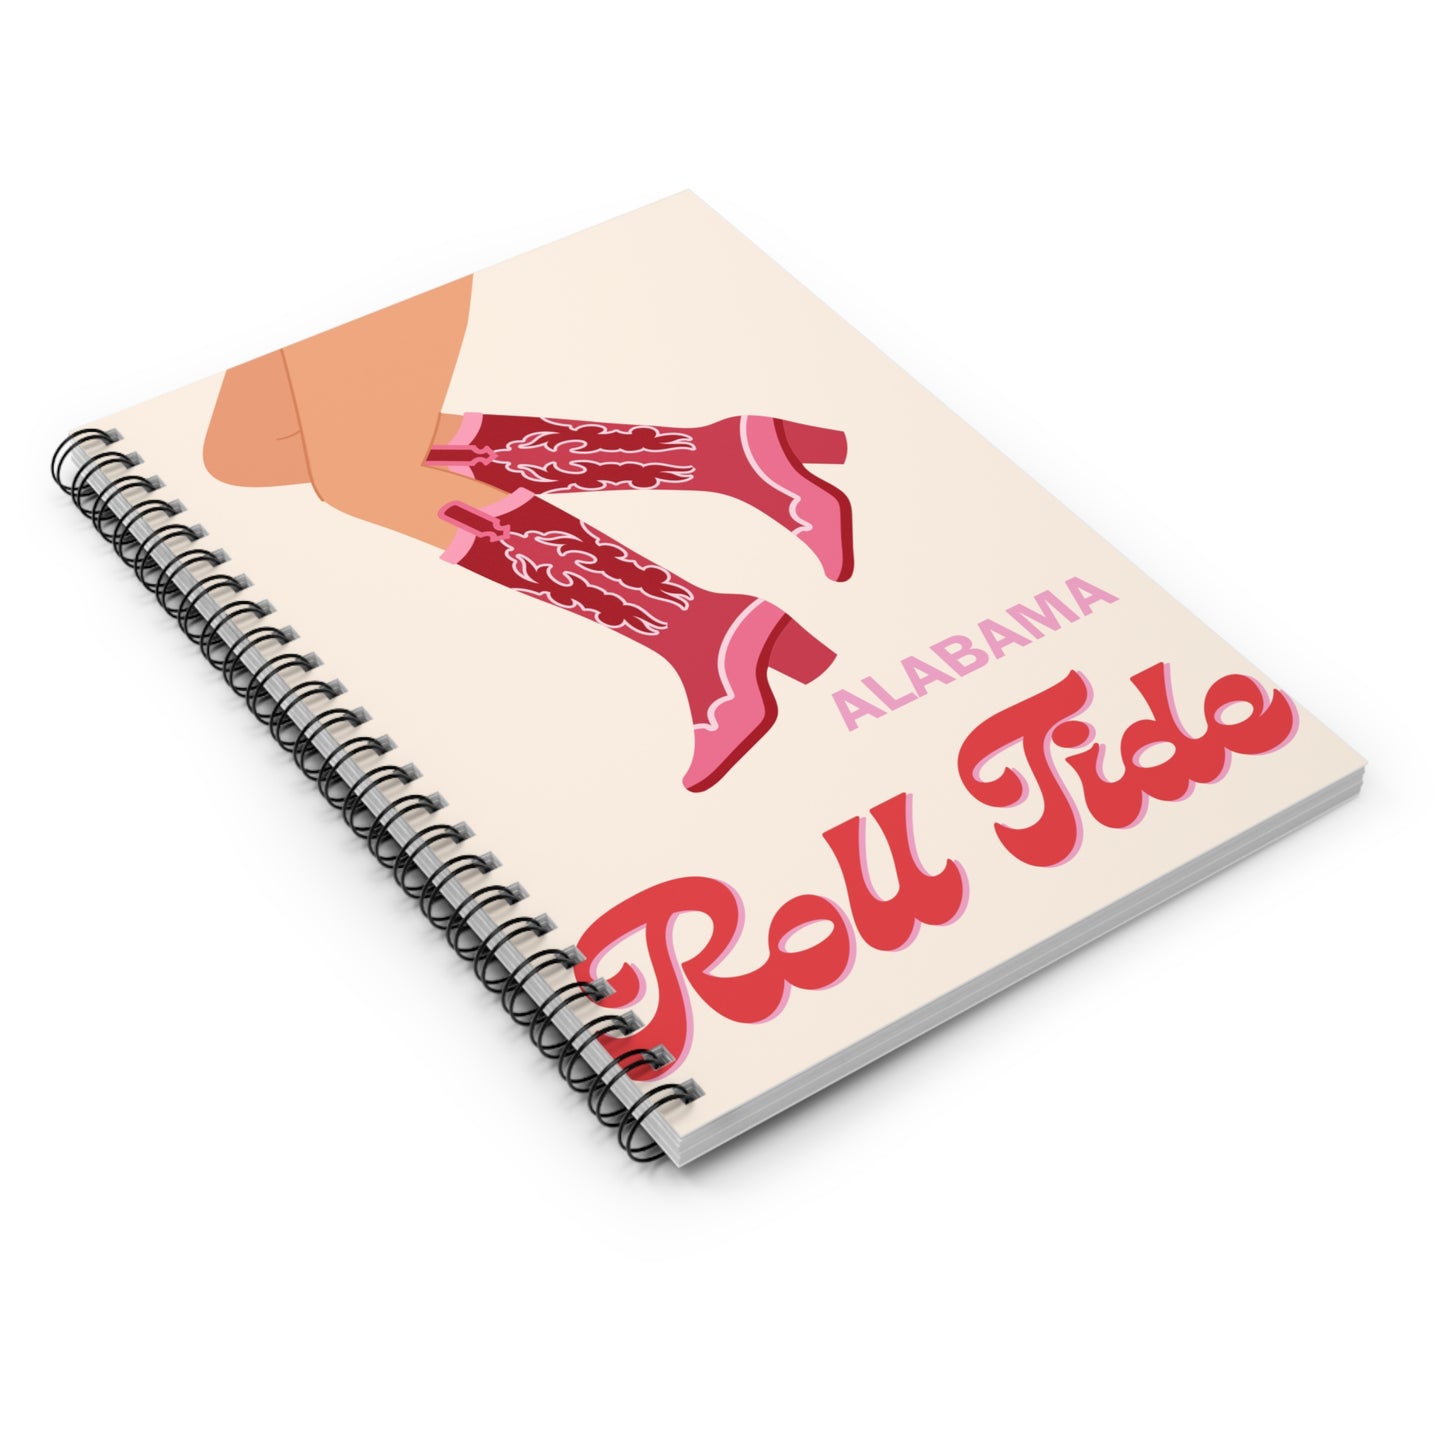 "ROLL TIDE "Spiral Notebook - Ruled Line